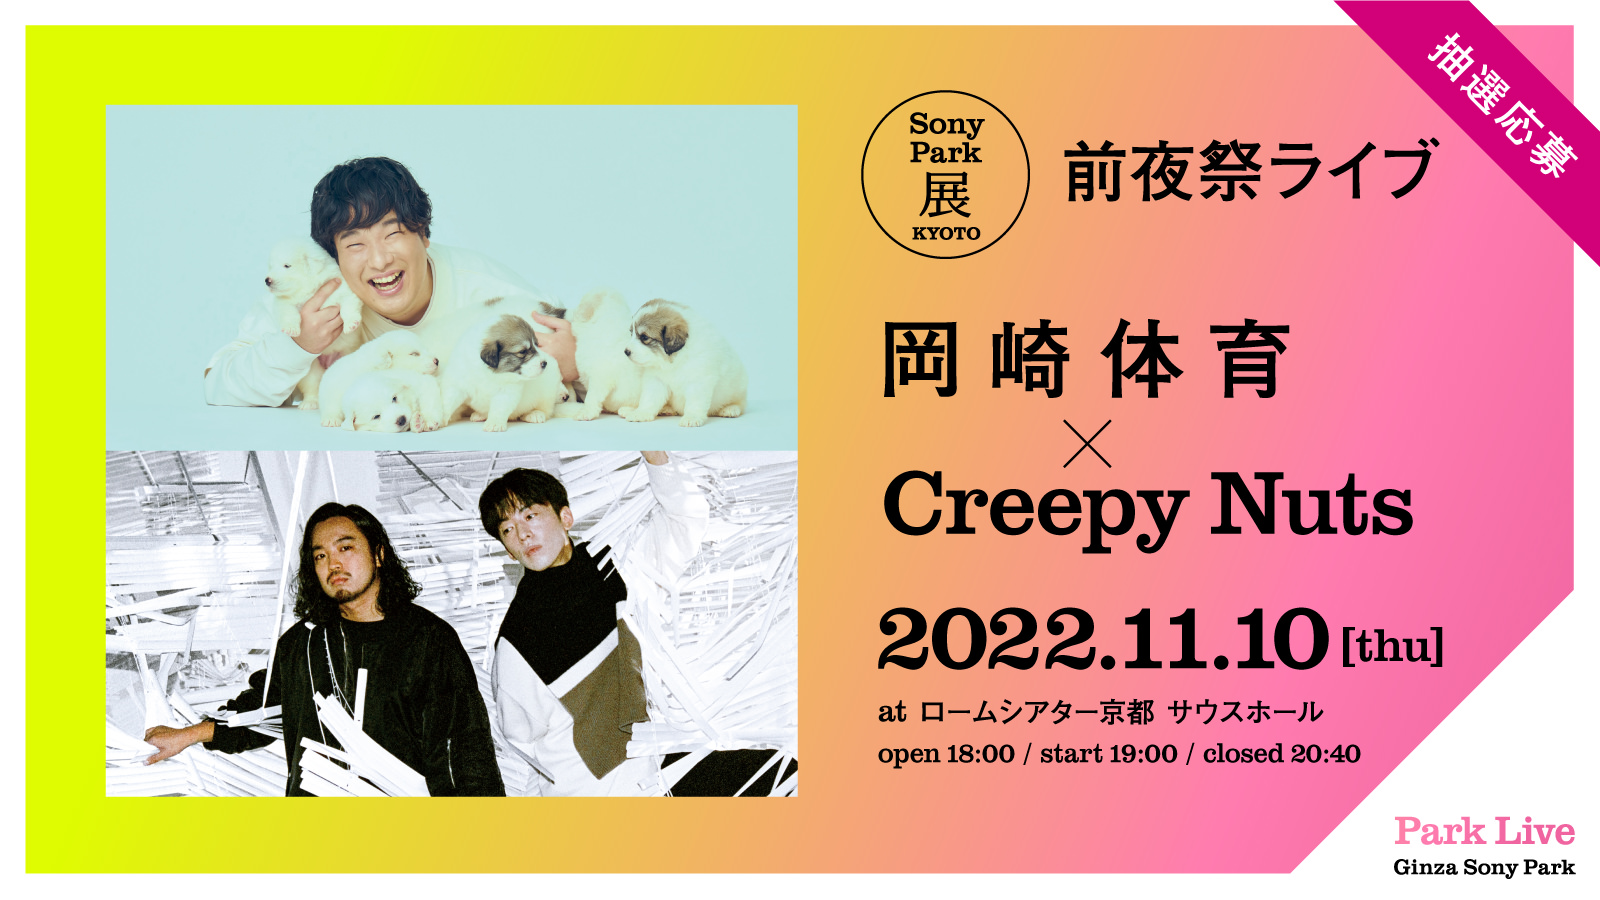 Sony Park Exhibition KYOTO: Previous night live performance okazakitaiiku × Creepy Nuts